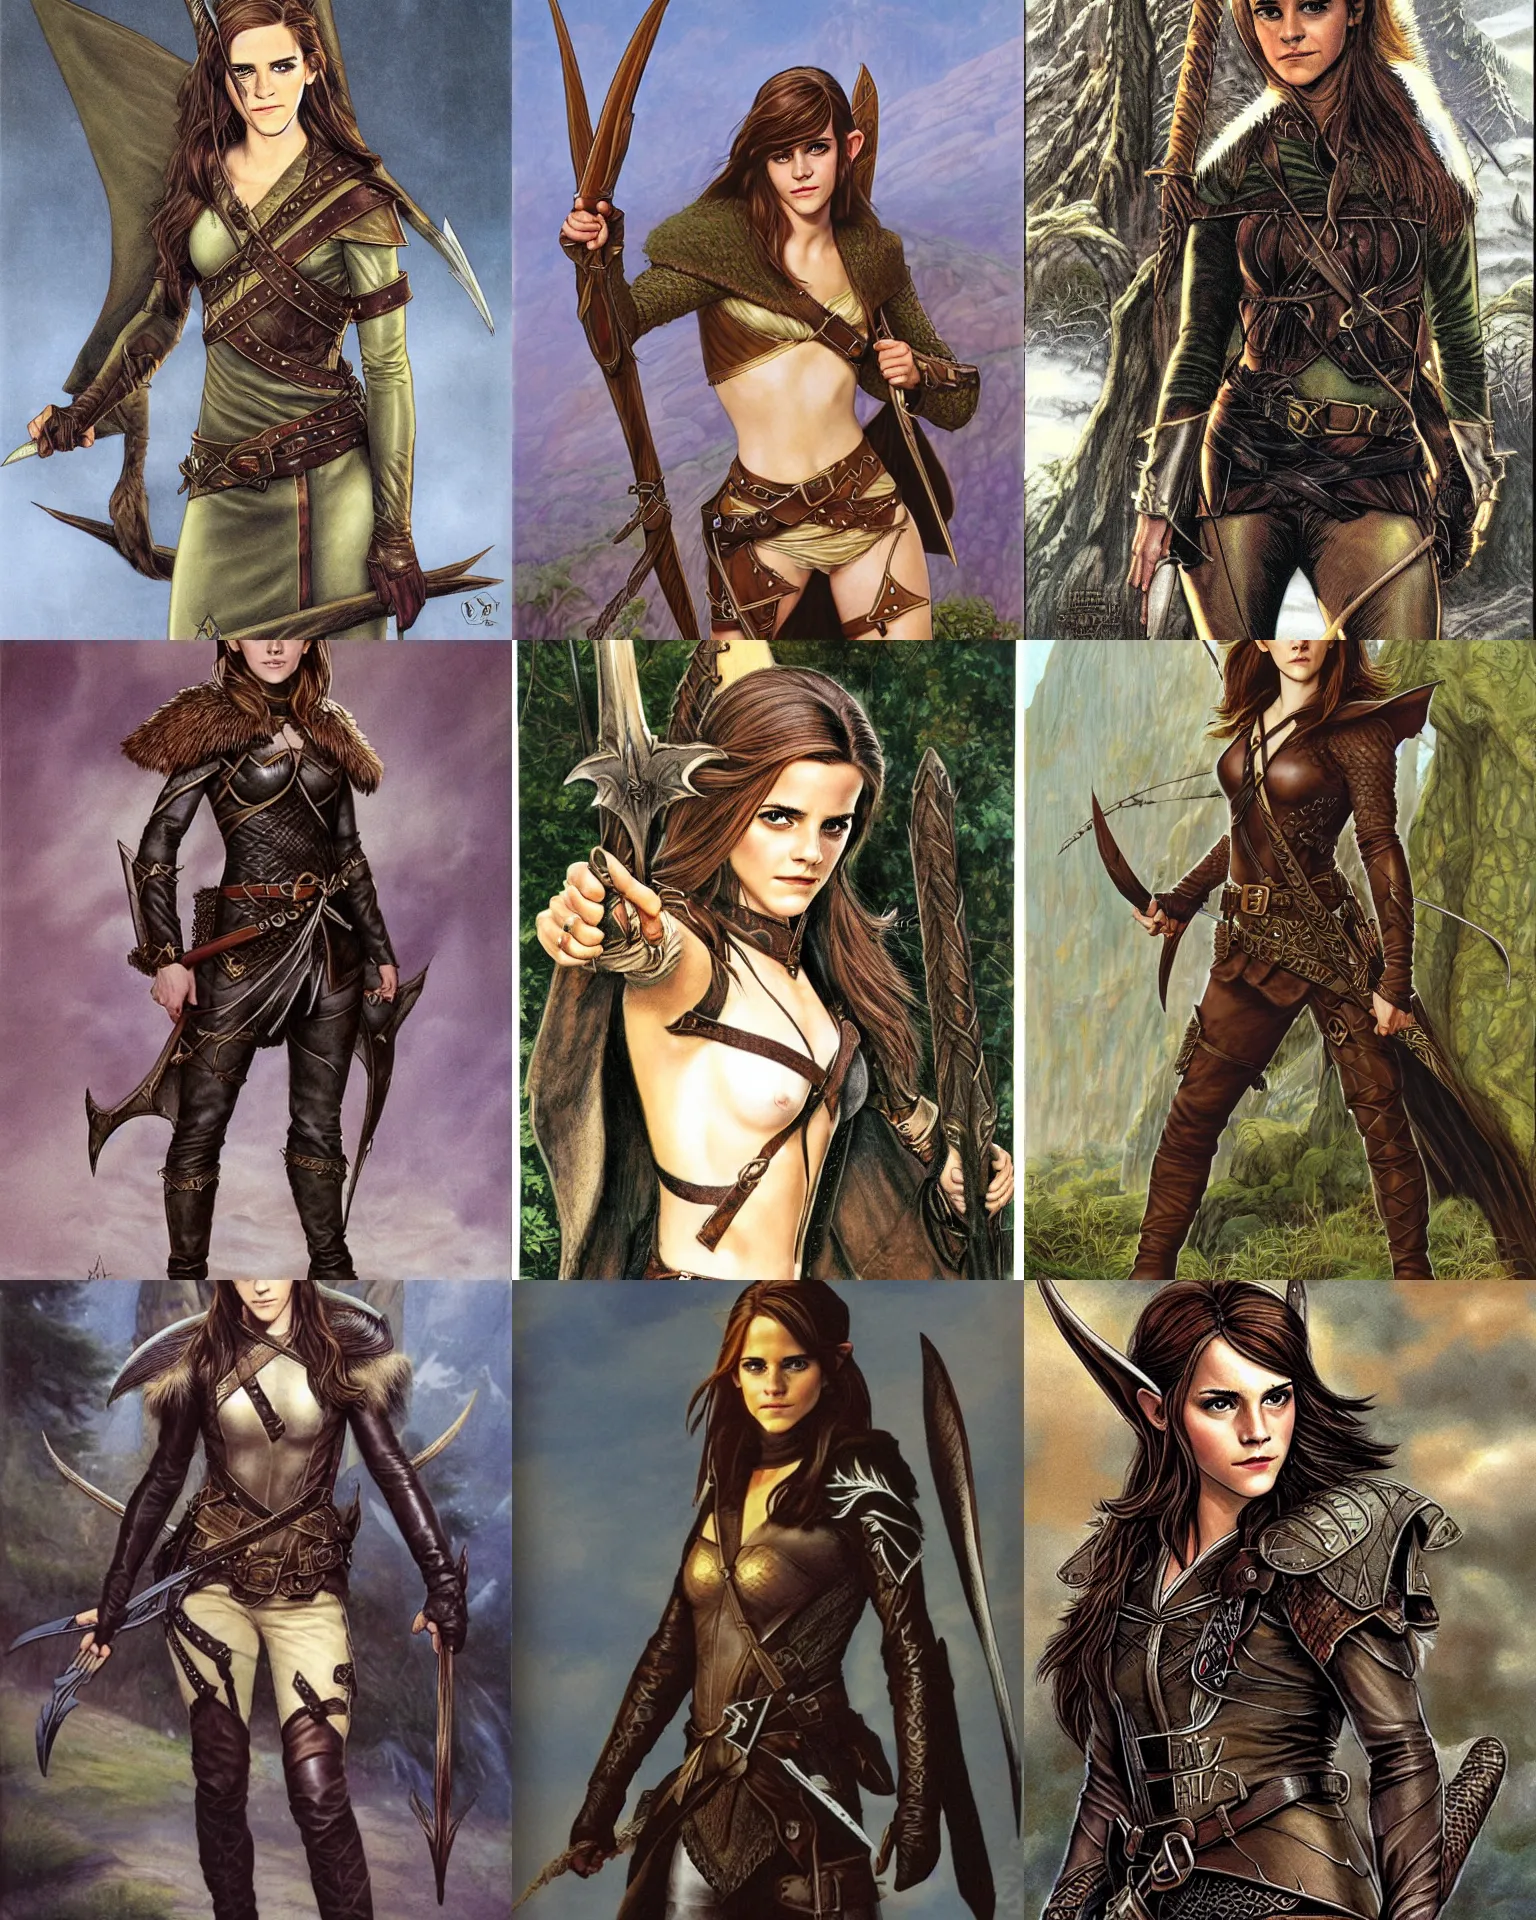 Prompt: emma watson as elven female ranger, dark hair, leather armor, portrait by larry elmore, dnd